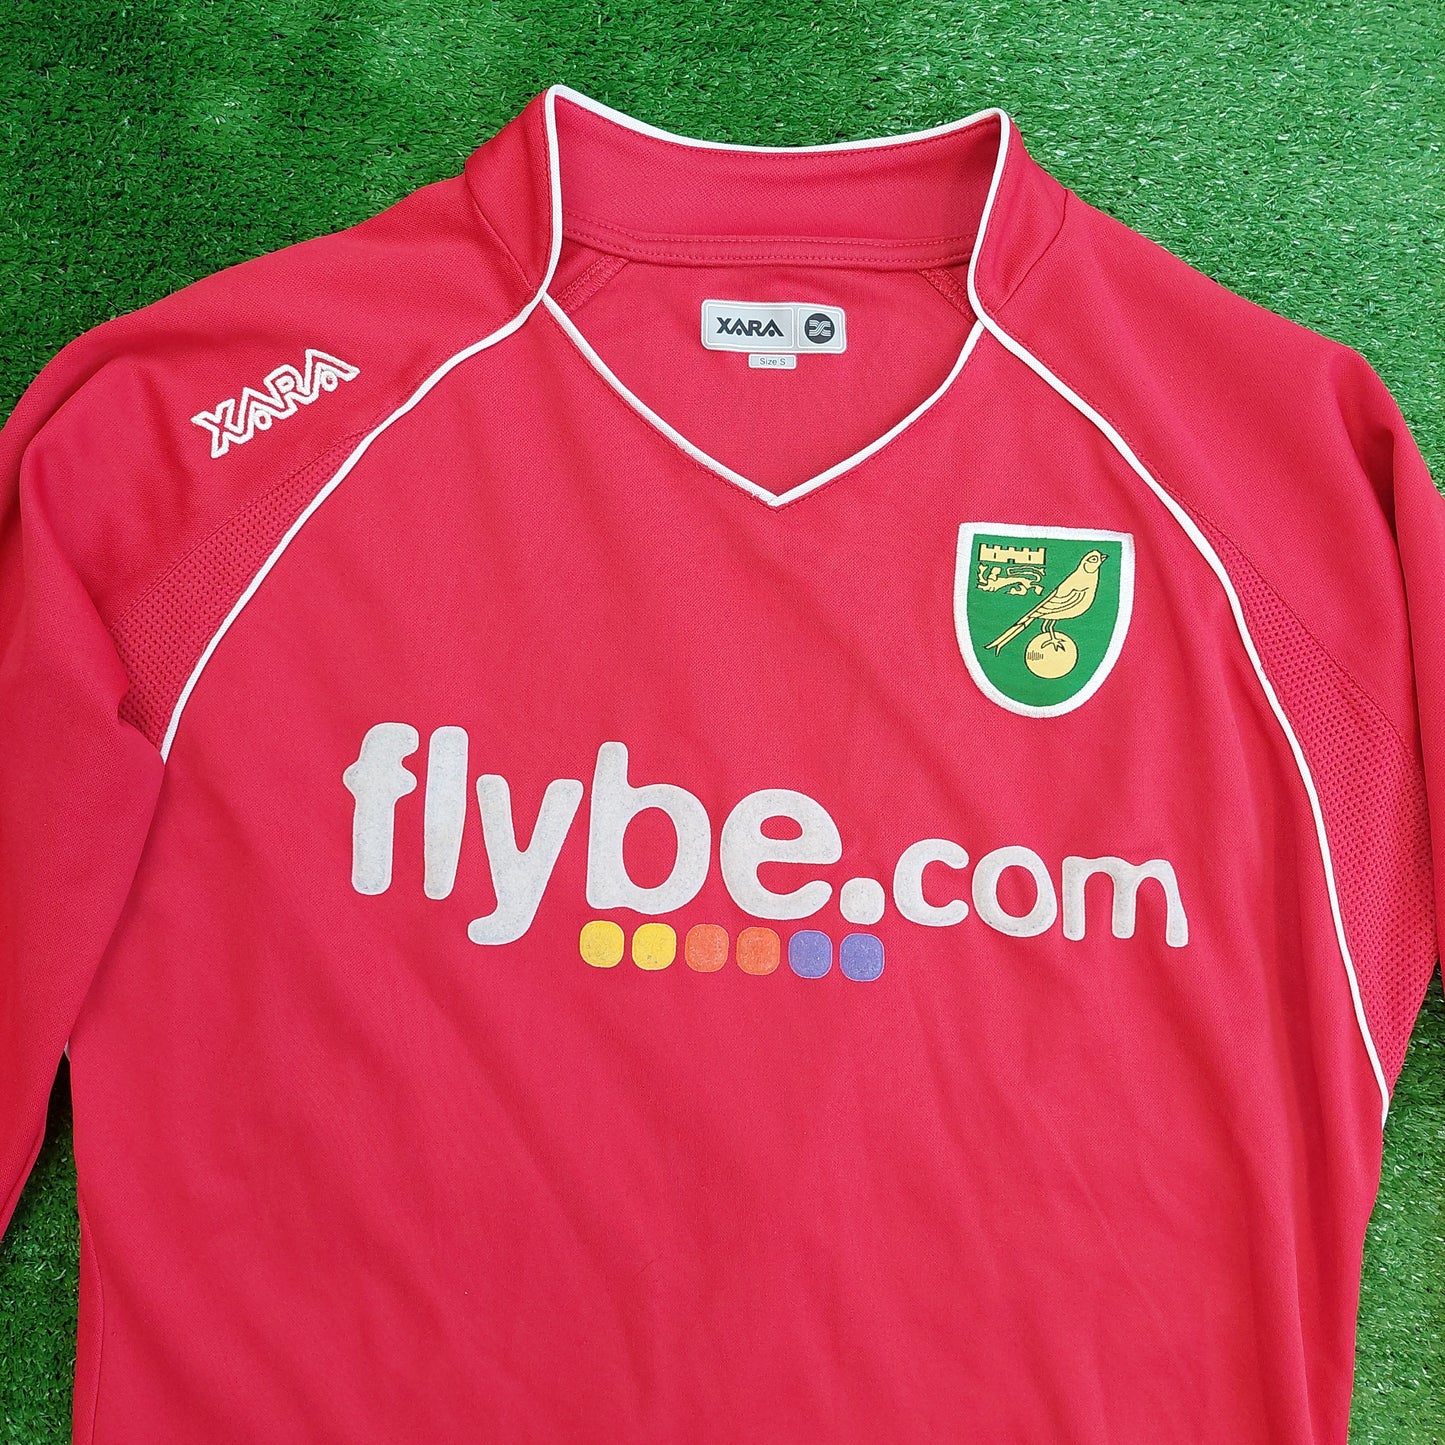 Norwich City 2007/08 Away Shirt (Very Good) - Size S